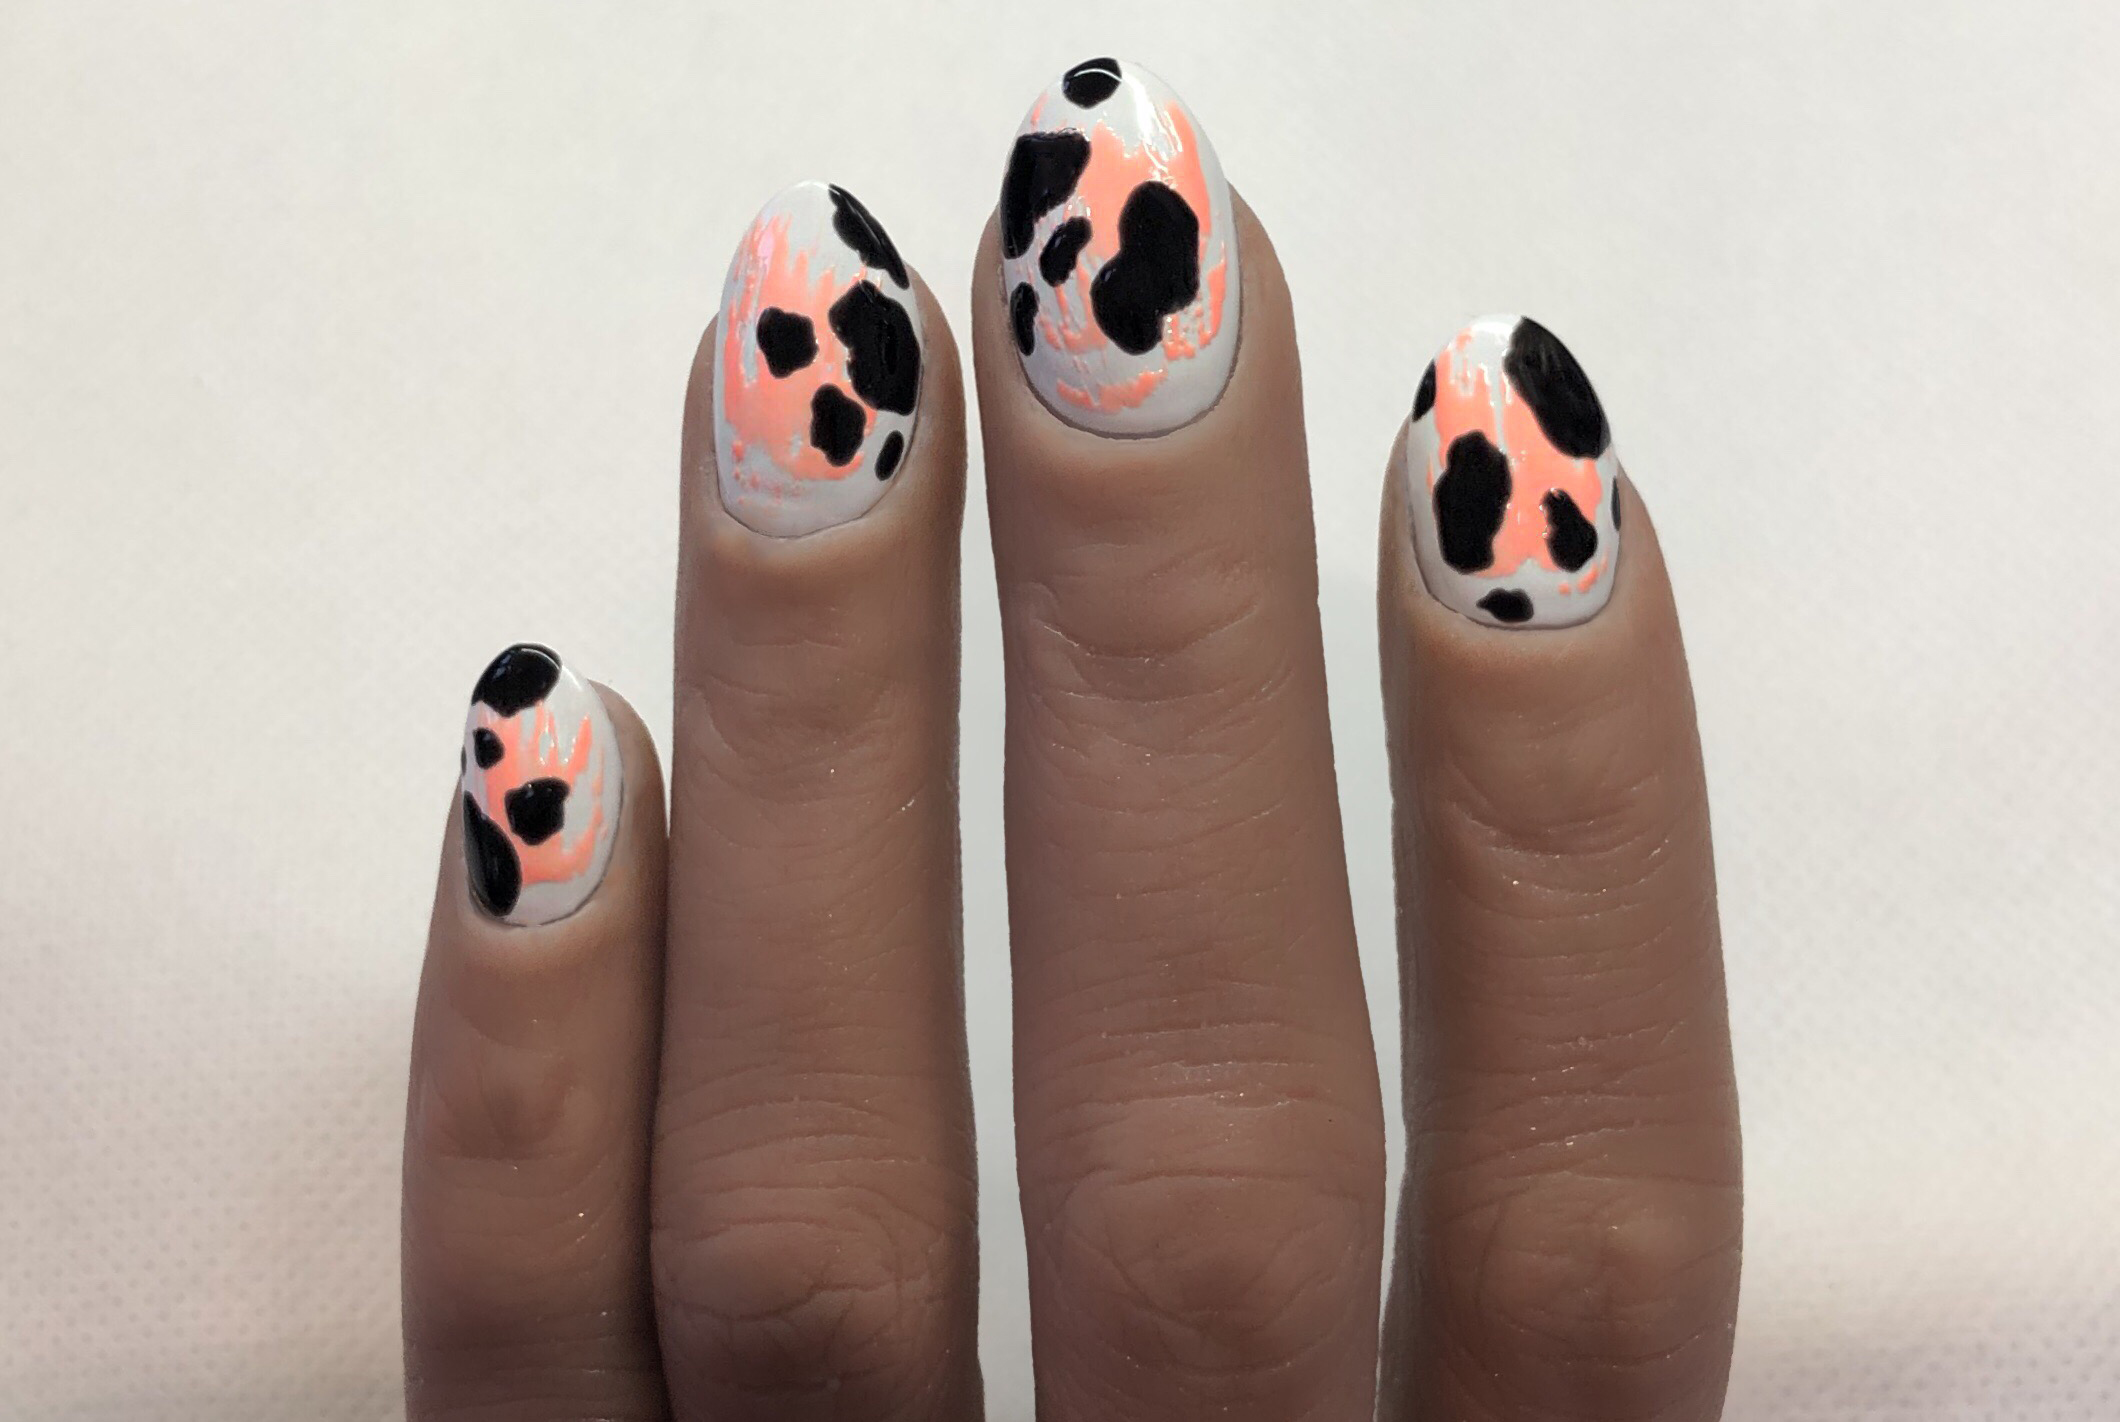 cow print nails | Country nails, Cow nails, Rodeo nails